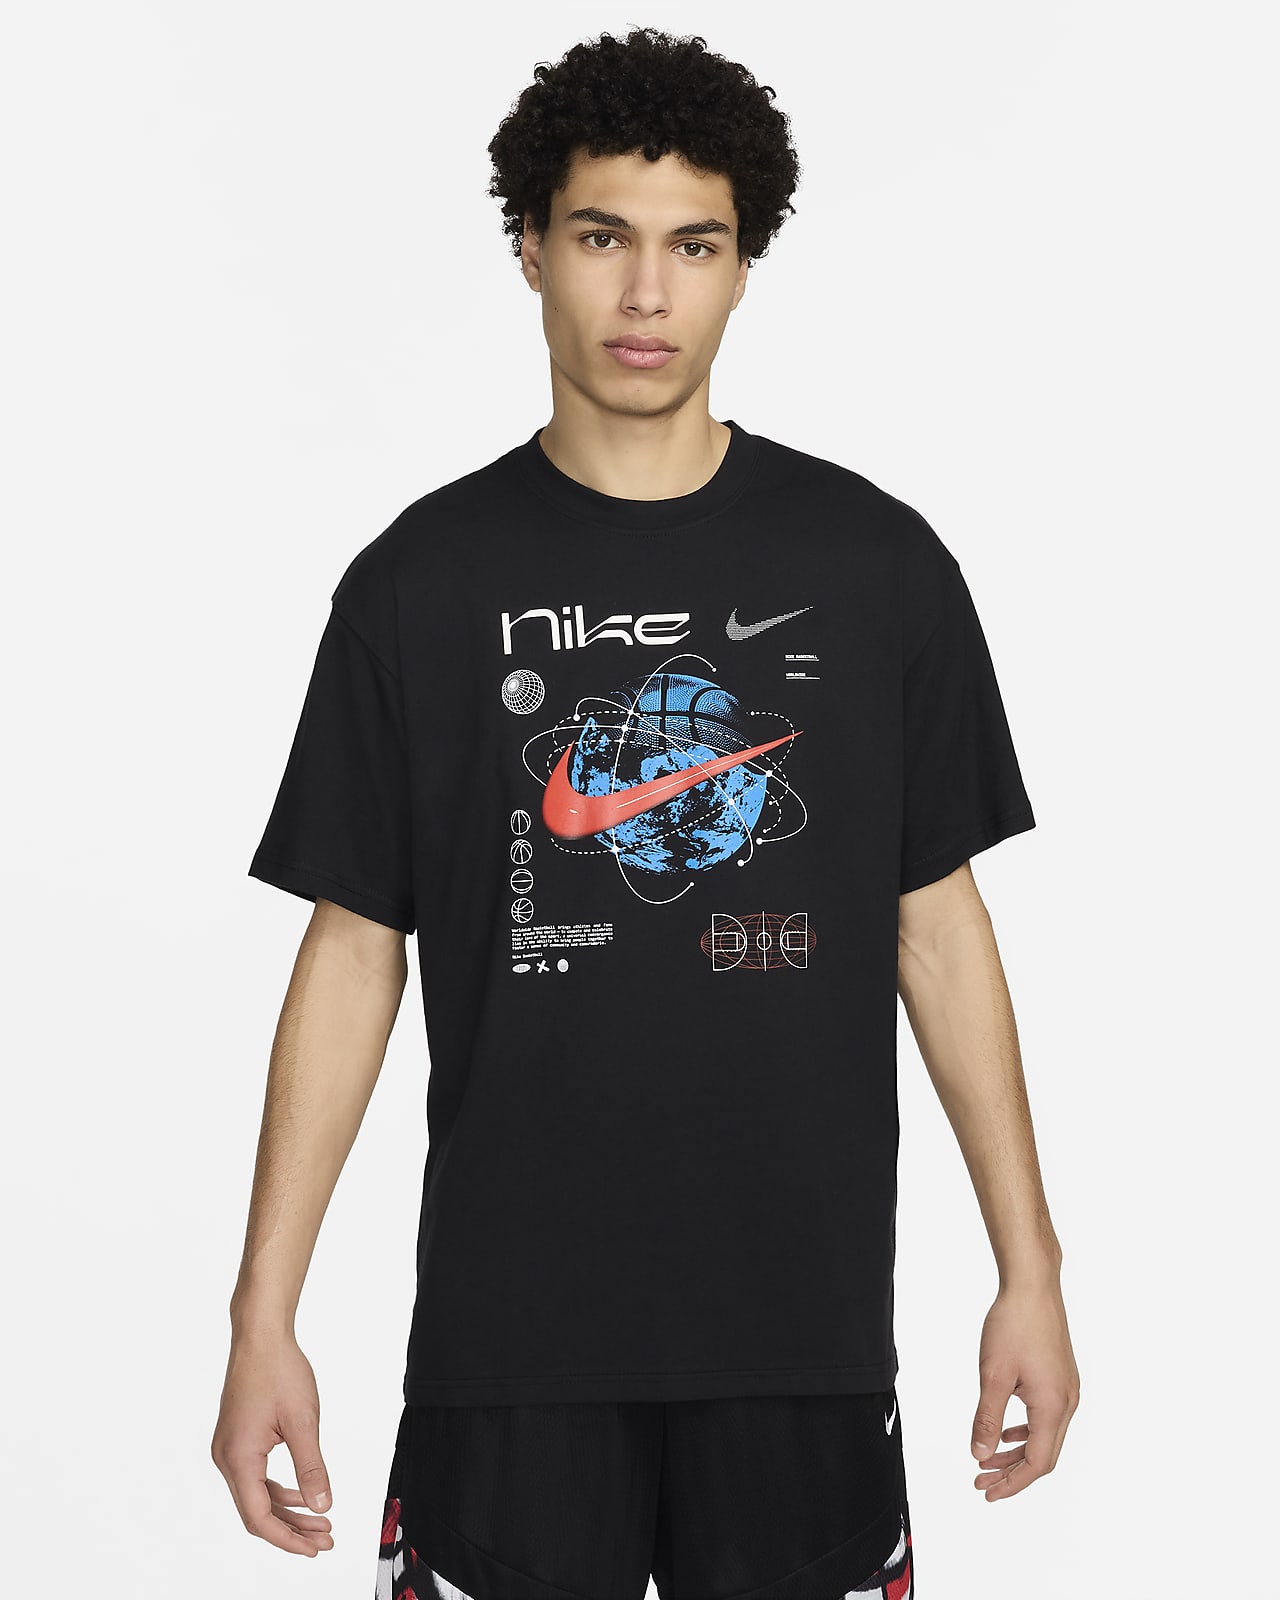 T-shirt de basquetebol Max90 Nike para homem